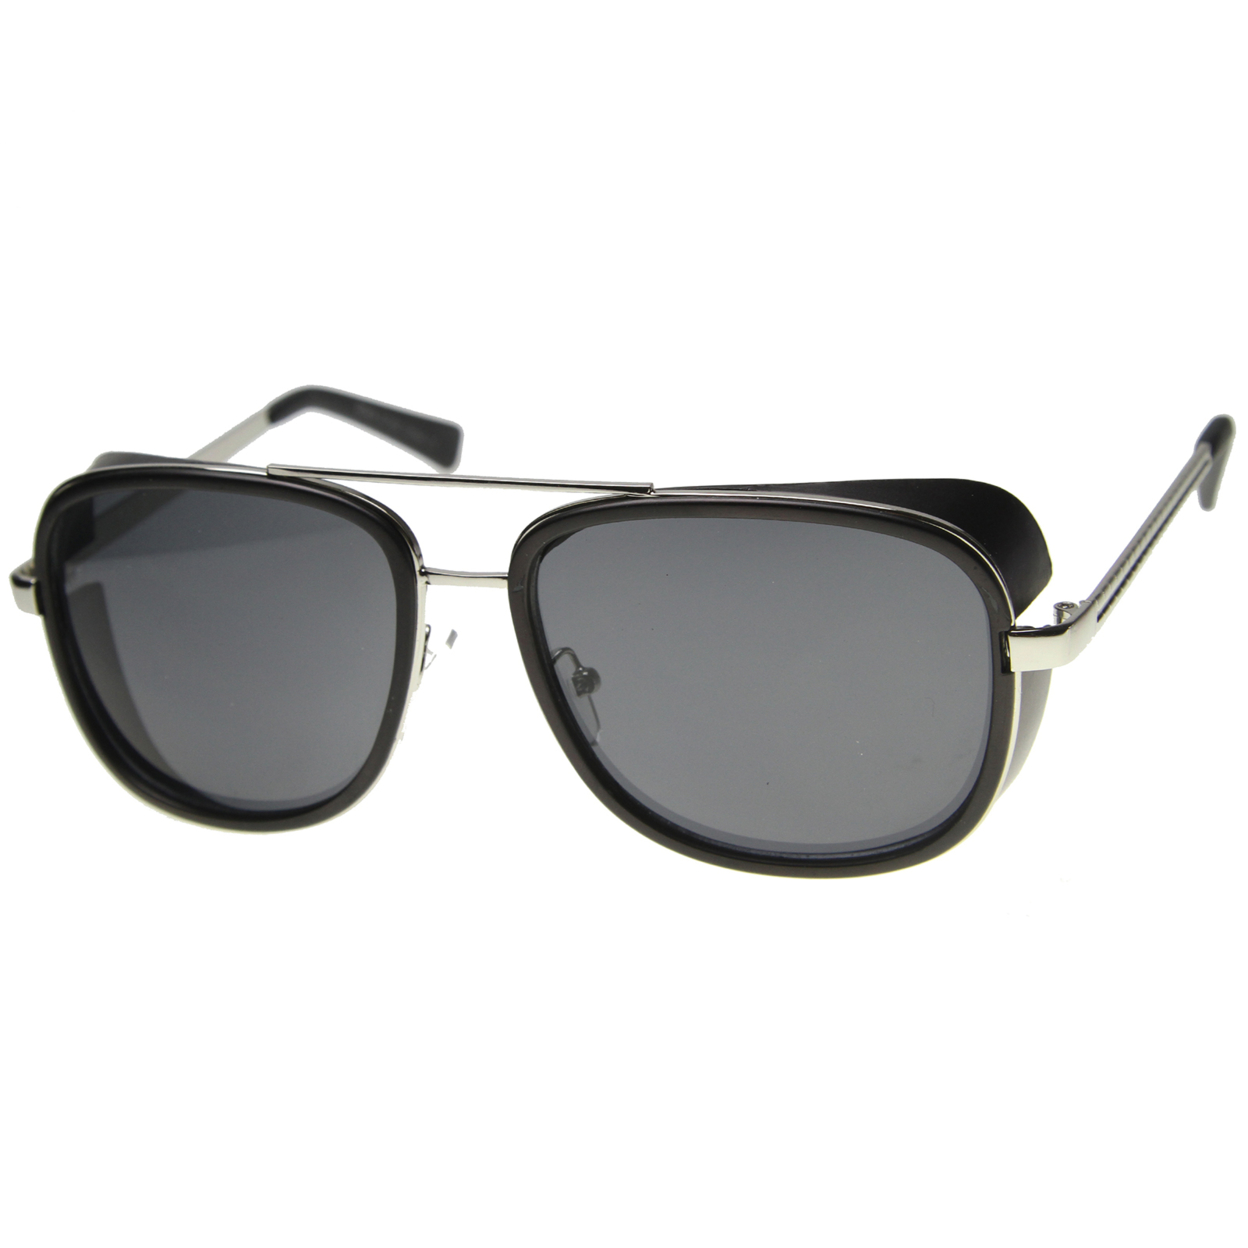 Unisex Aviator Sunglasses With UV400 Protected Mirrored Lens 9896 - Shiny Black-Gold / Smoke